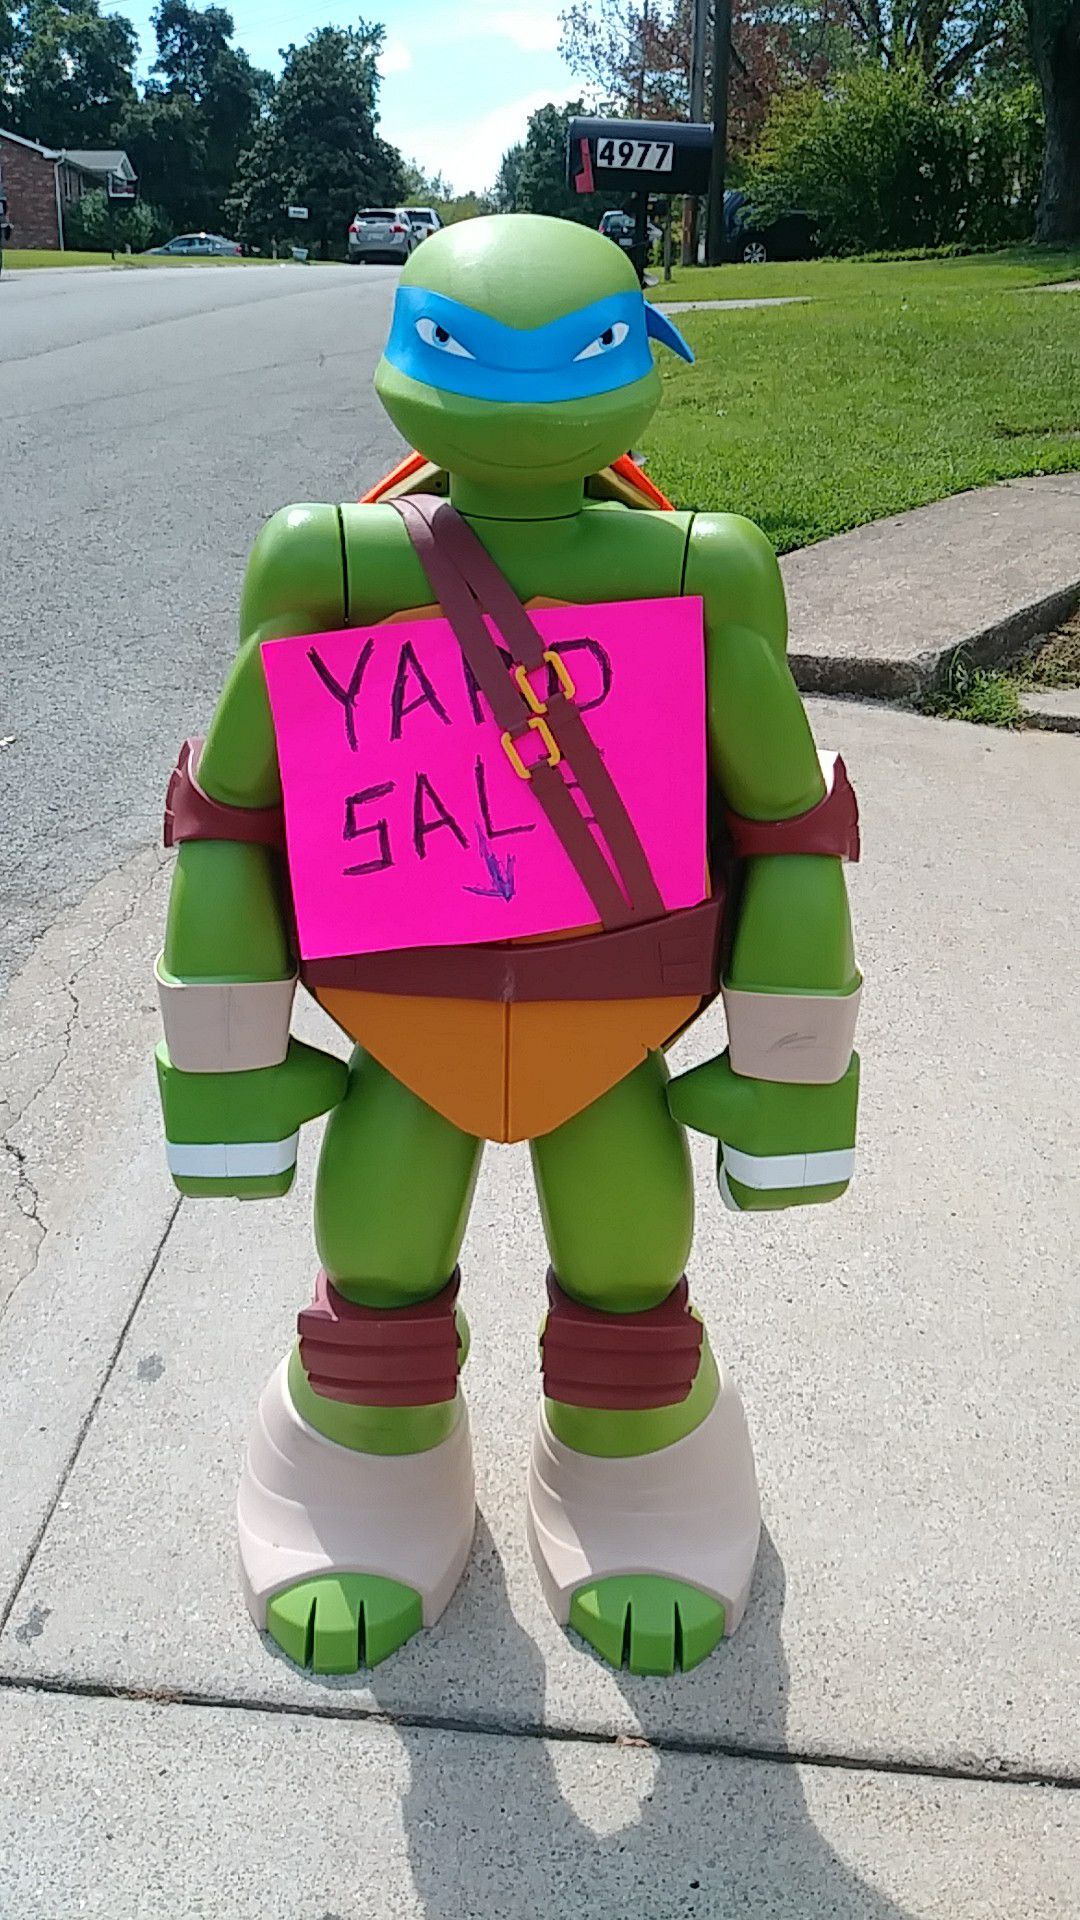 Yard sale today and tomorrow